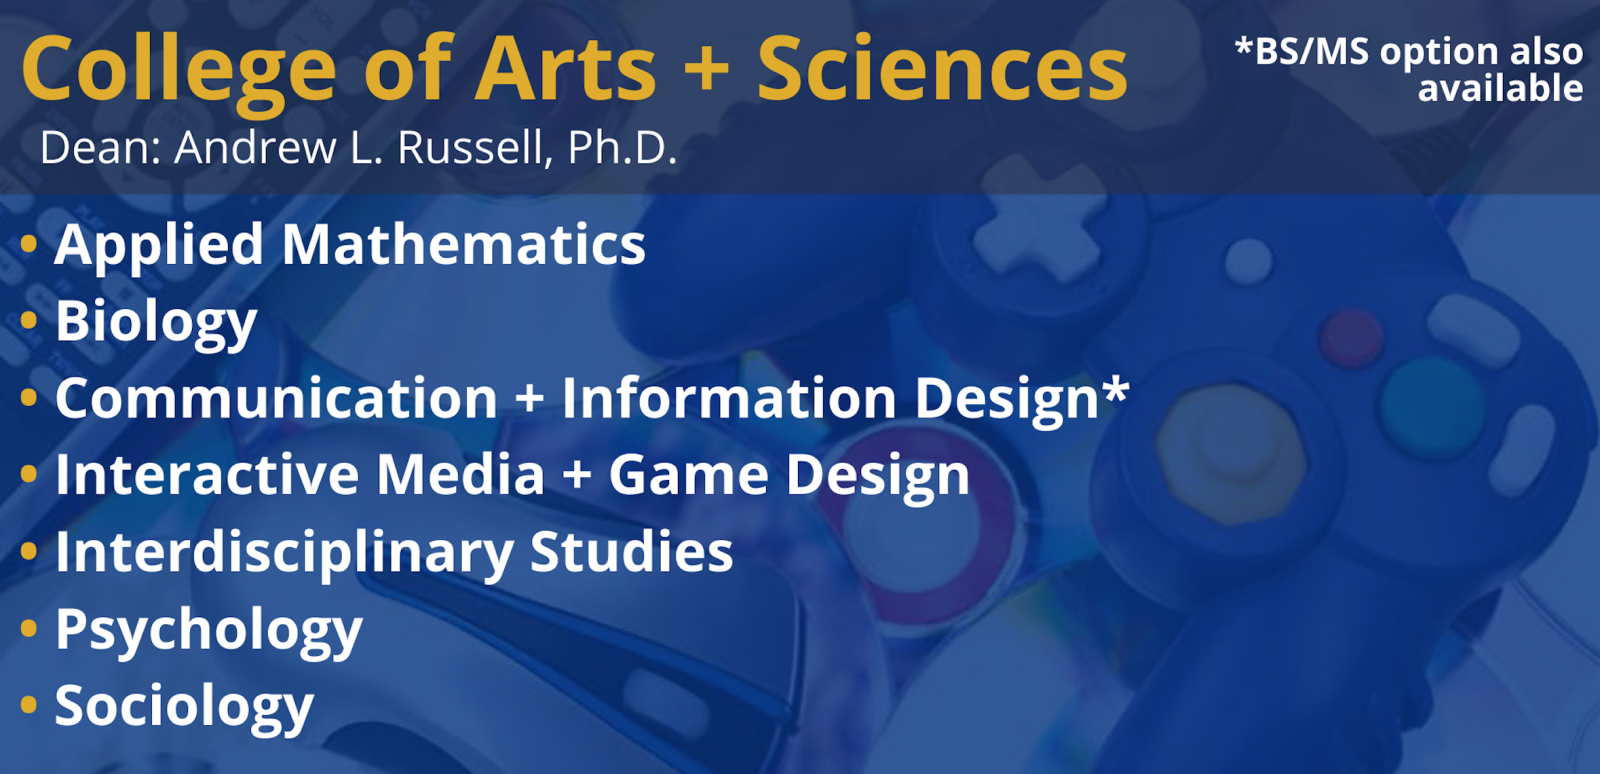 College of Arts + Sciences - Dean: Andrew L. Russell, Ph.D. - Applied Mathematics, Biology, Communication + Information Design, Interactive Media + Game Design, Interdisciplinary Studies, Psychology, Sociology